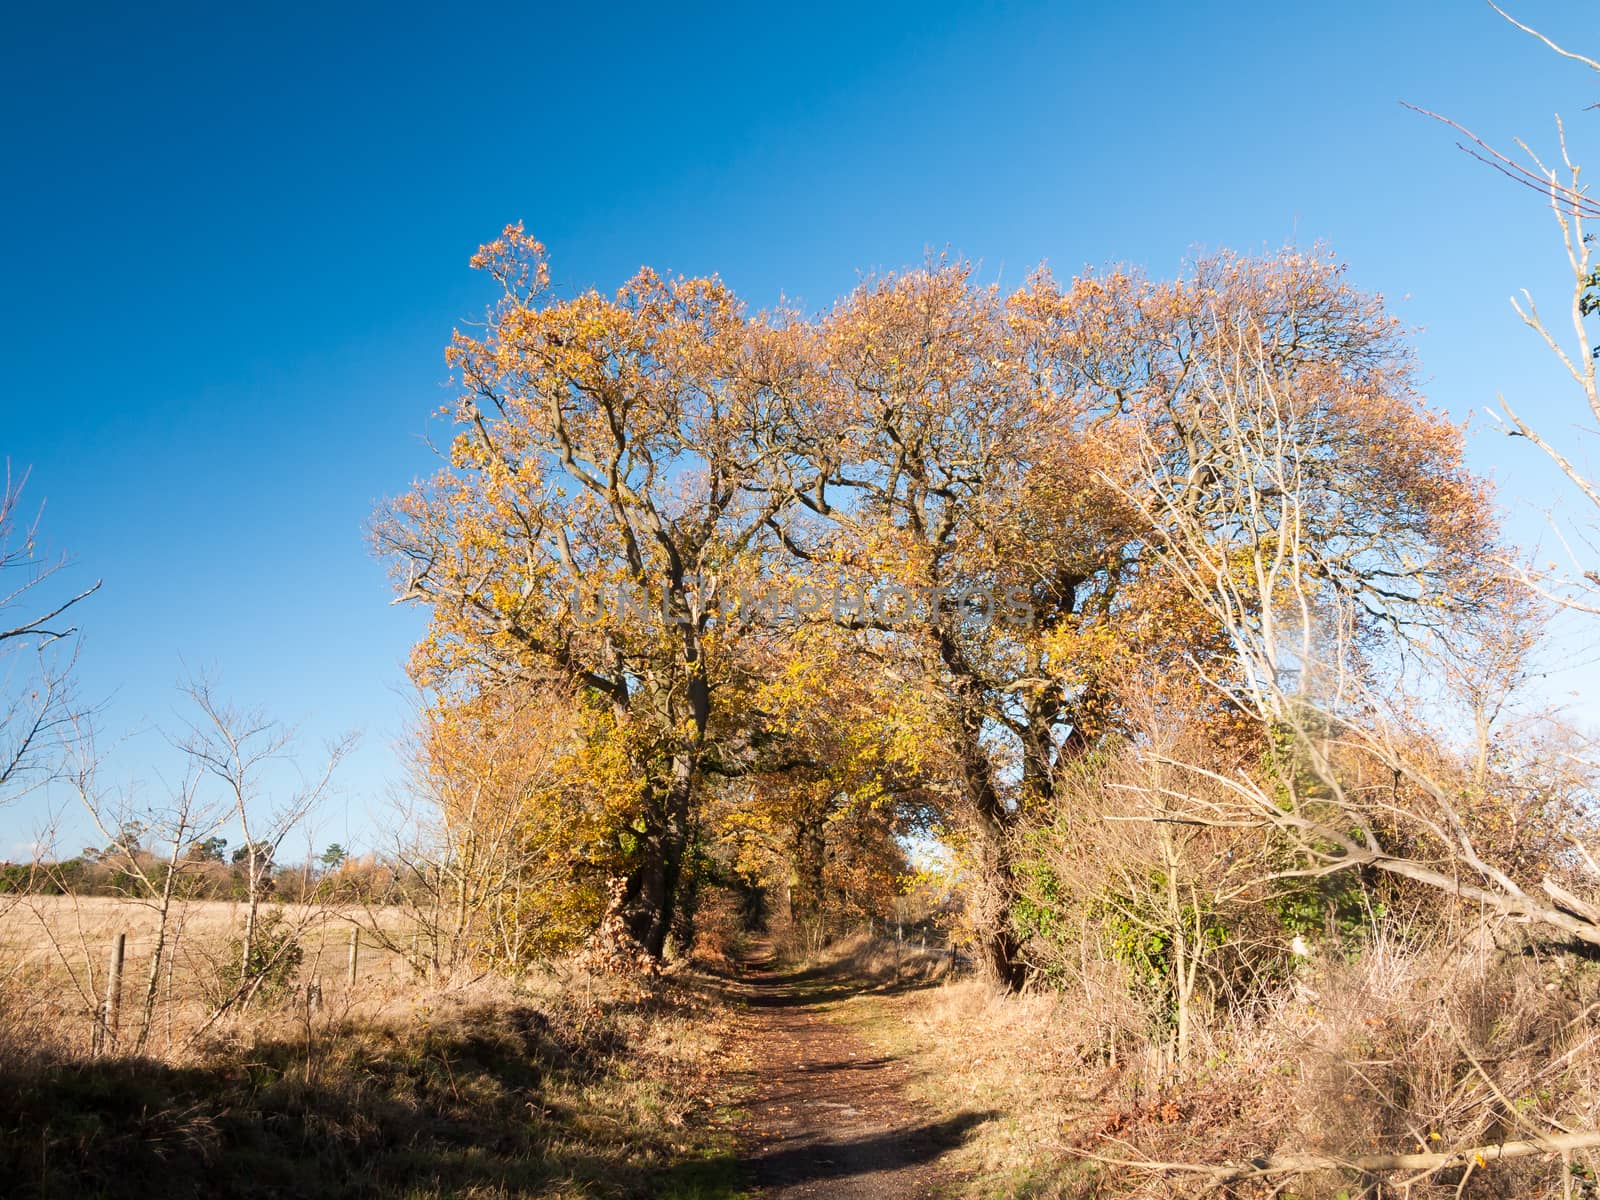 autumn big trees bare branches leaves yellow orange blue sky landscape; essex; england; uk